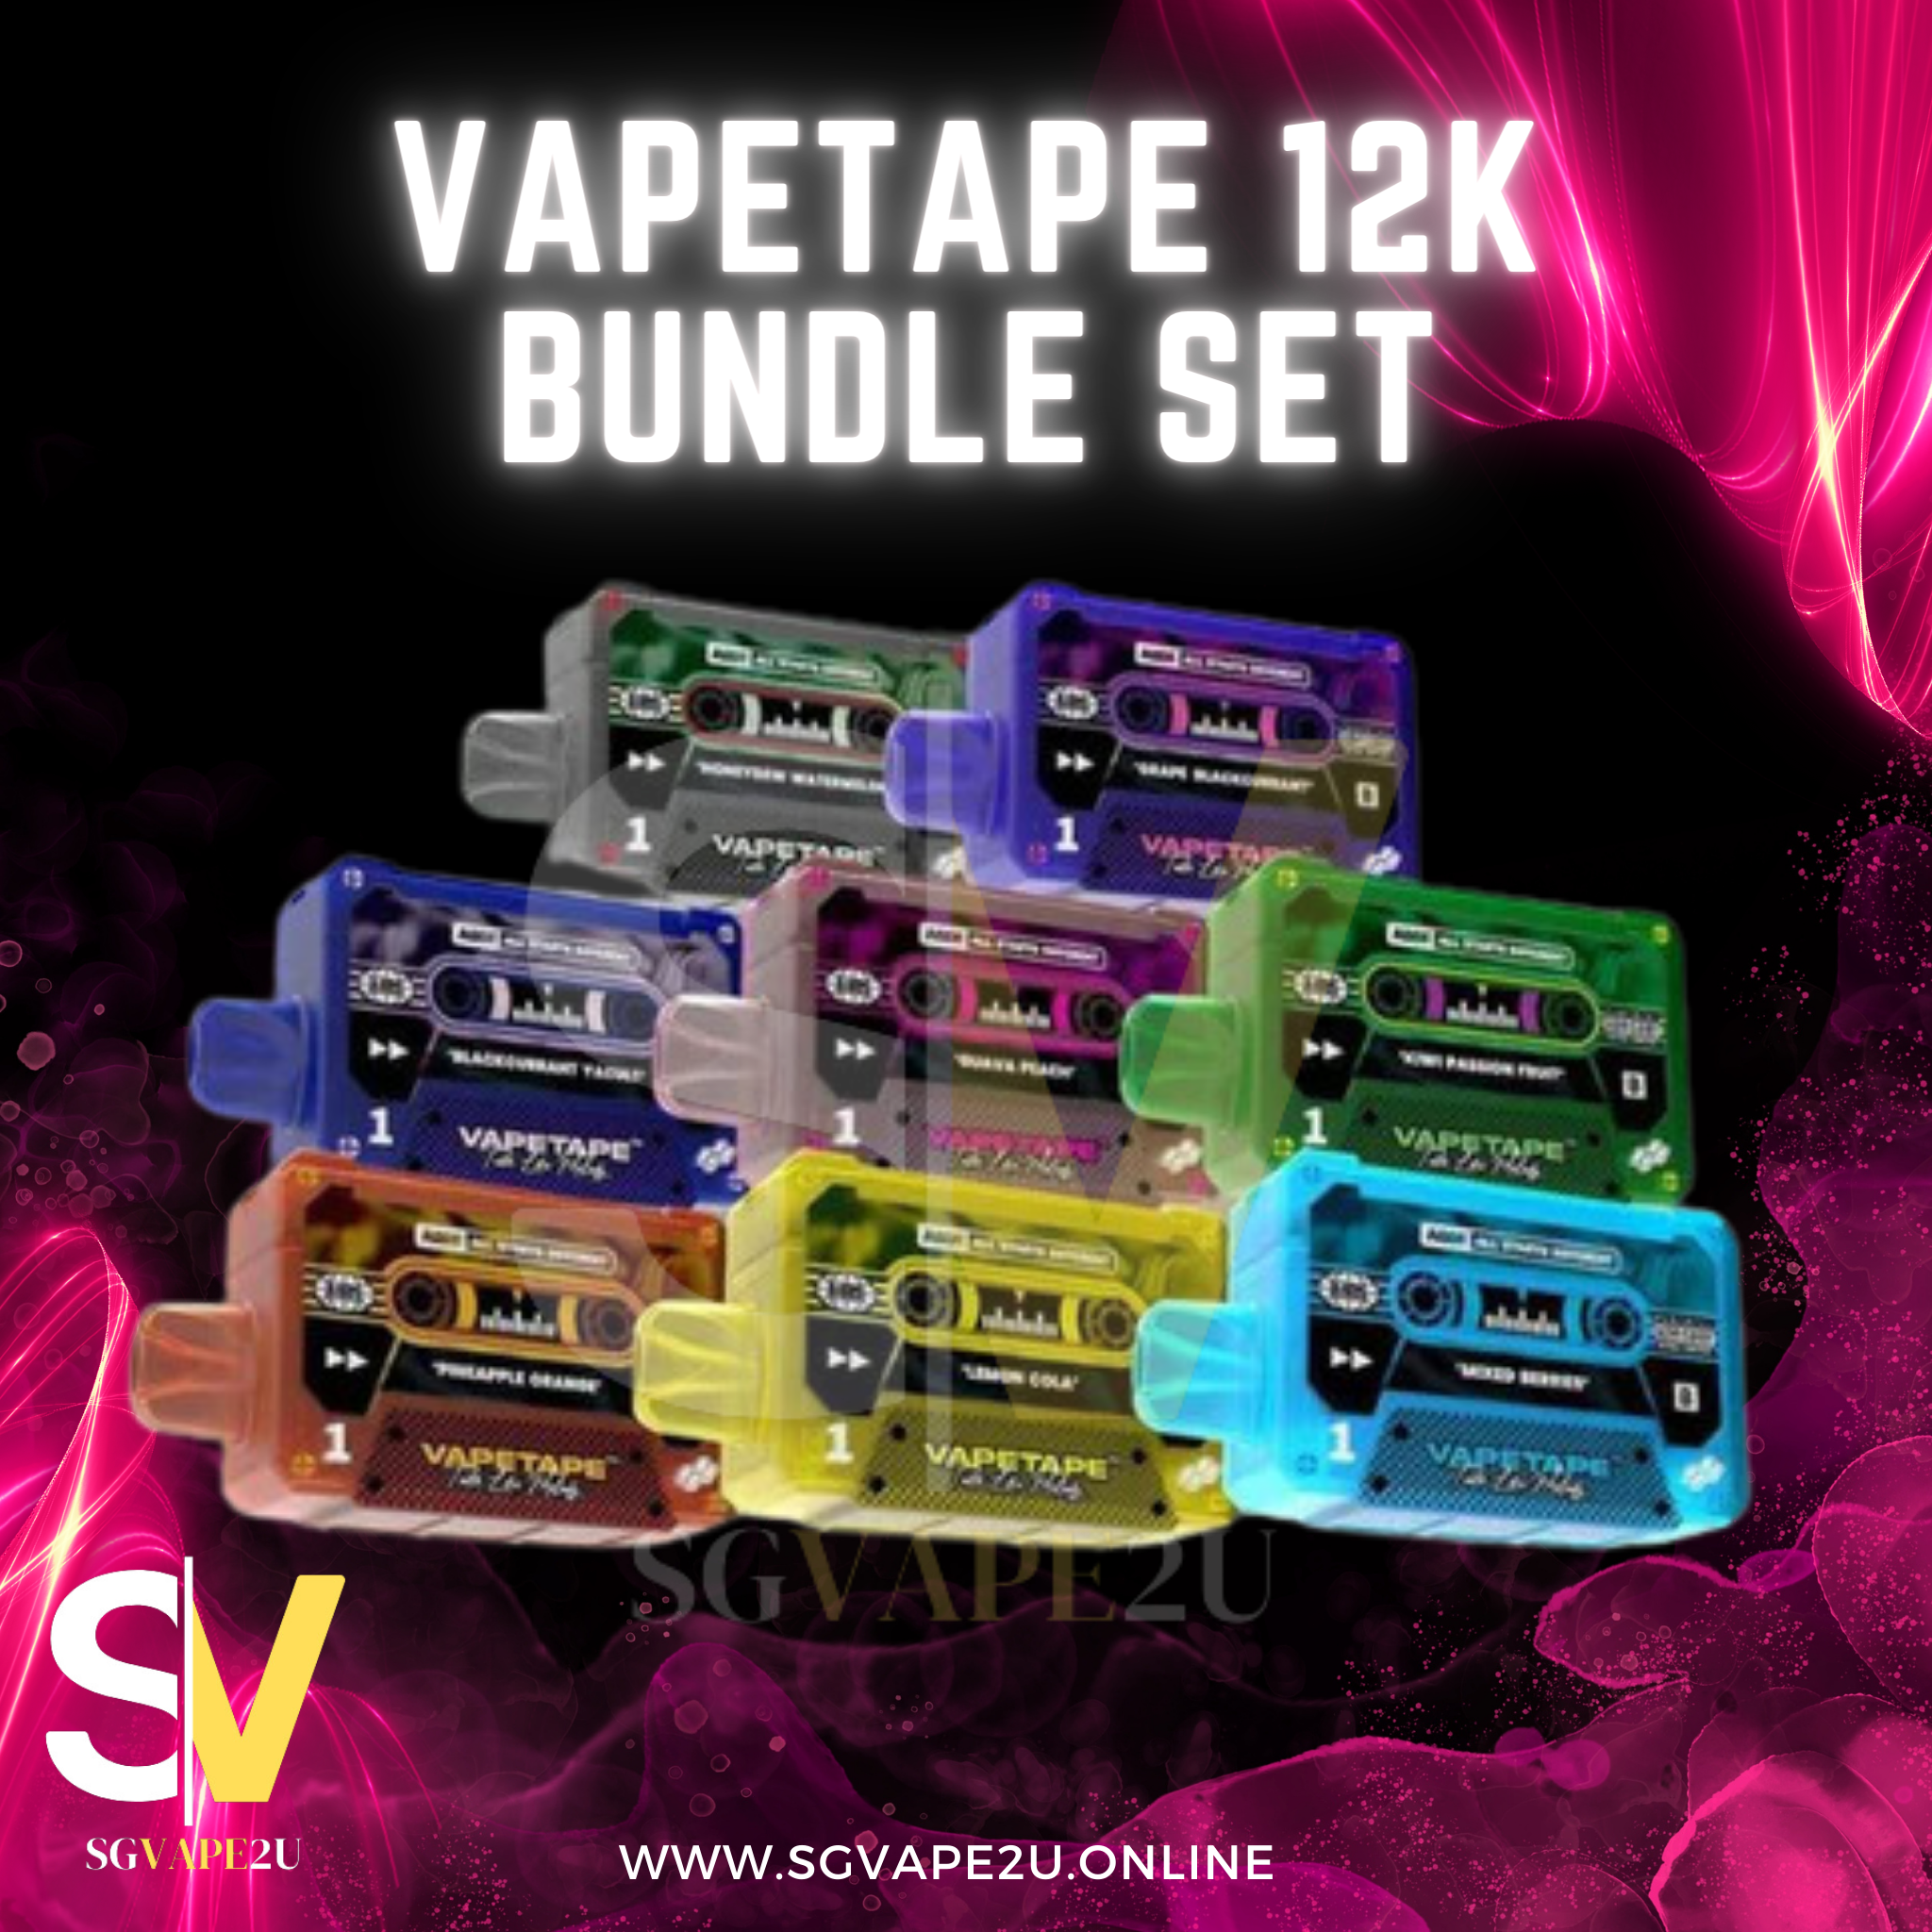 vapetape-12k-bundle-set